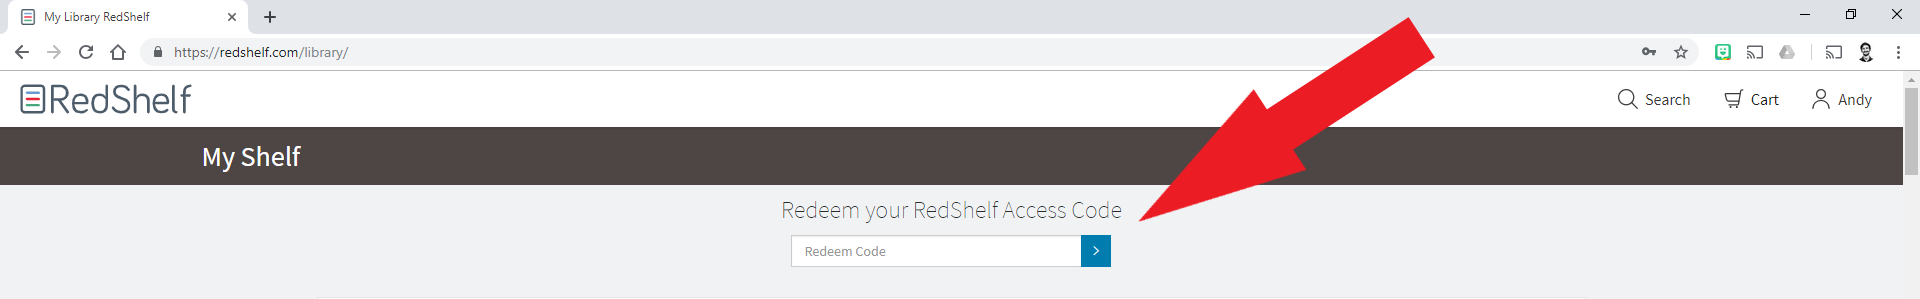 red shelf coupon code